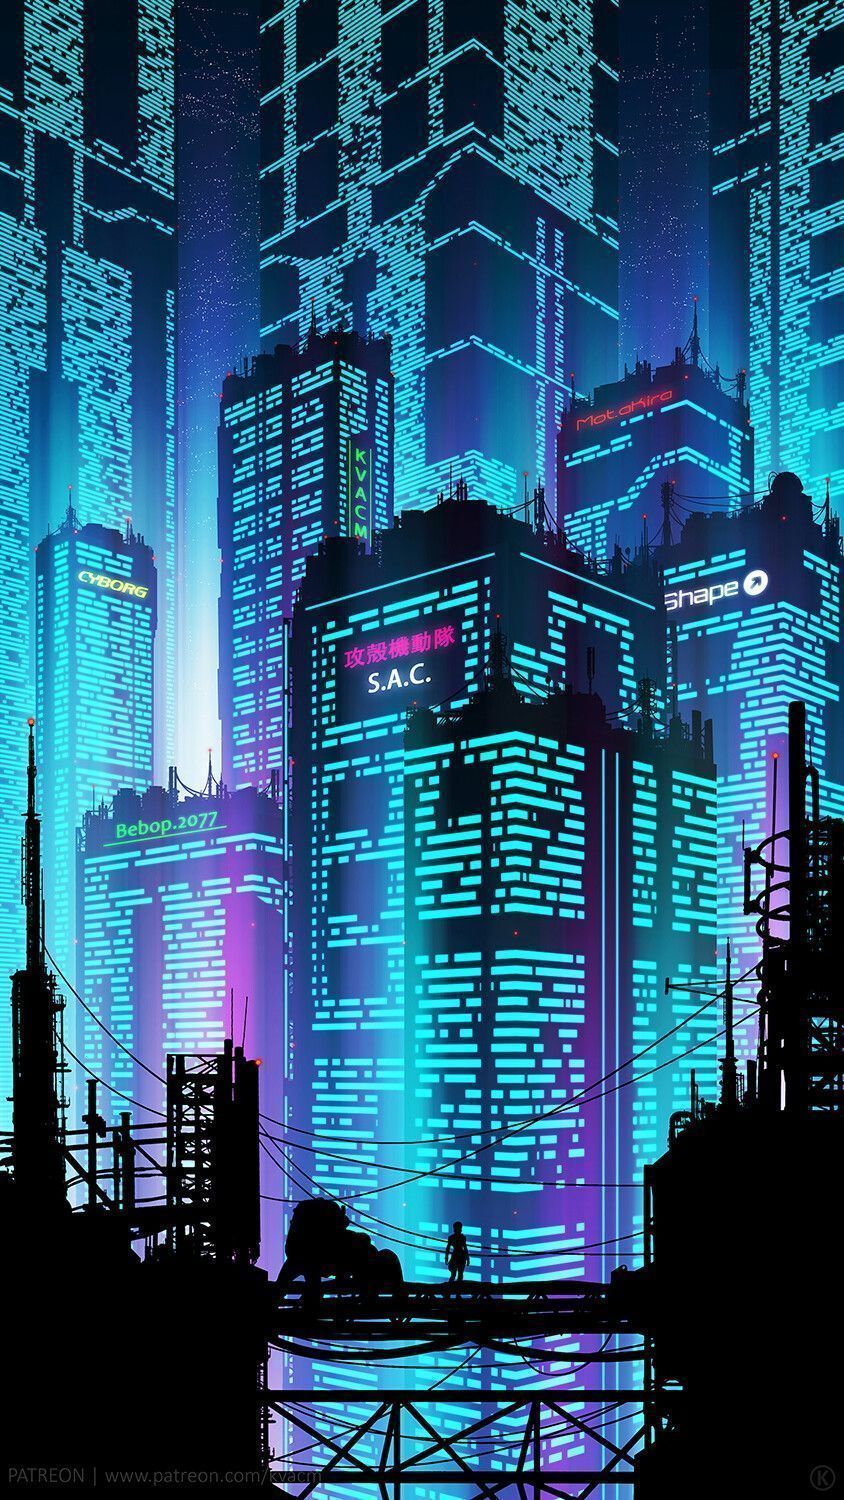 Cyberpunk 2077. Cyberpunk aesthetic, Cyberpunk city, Cyberpunk art